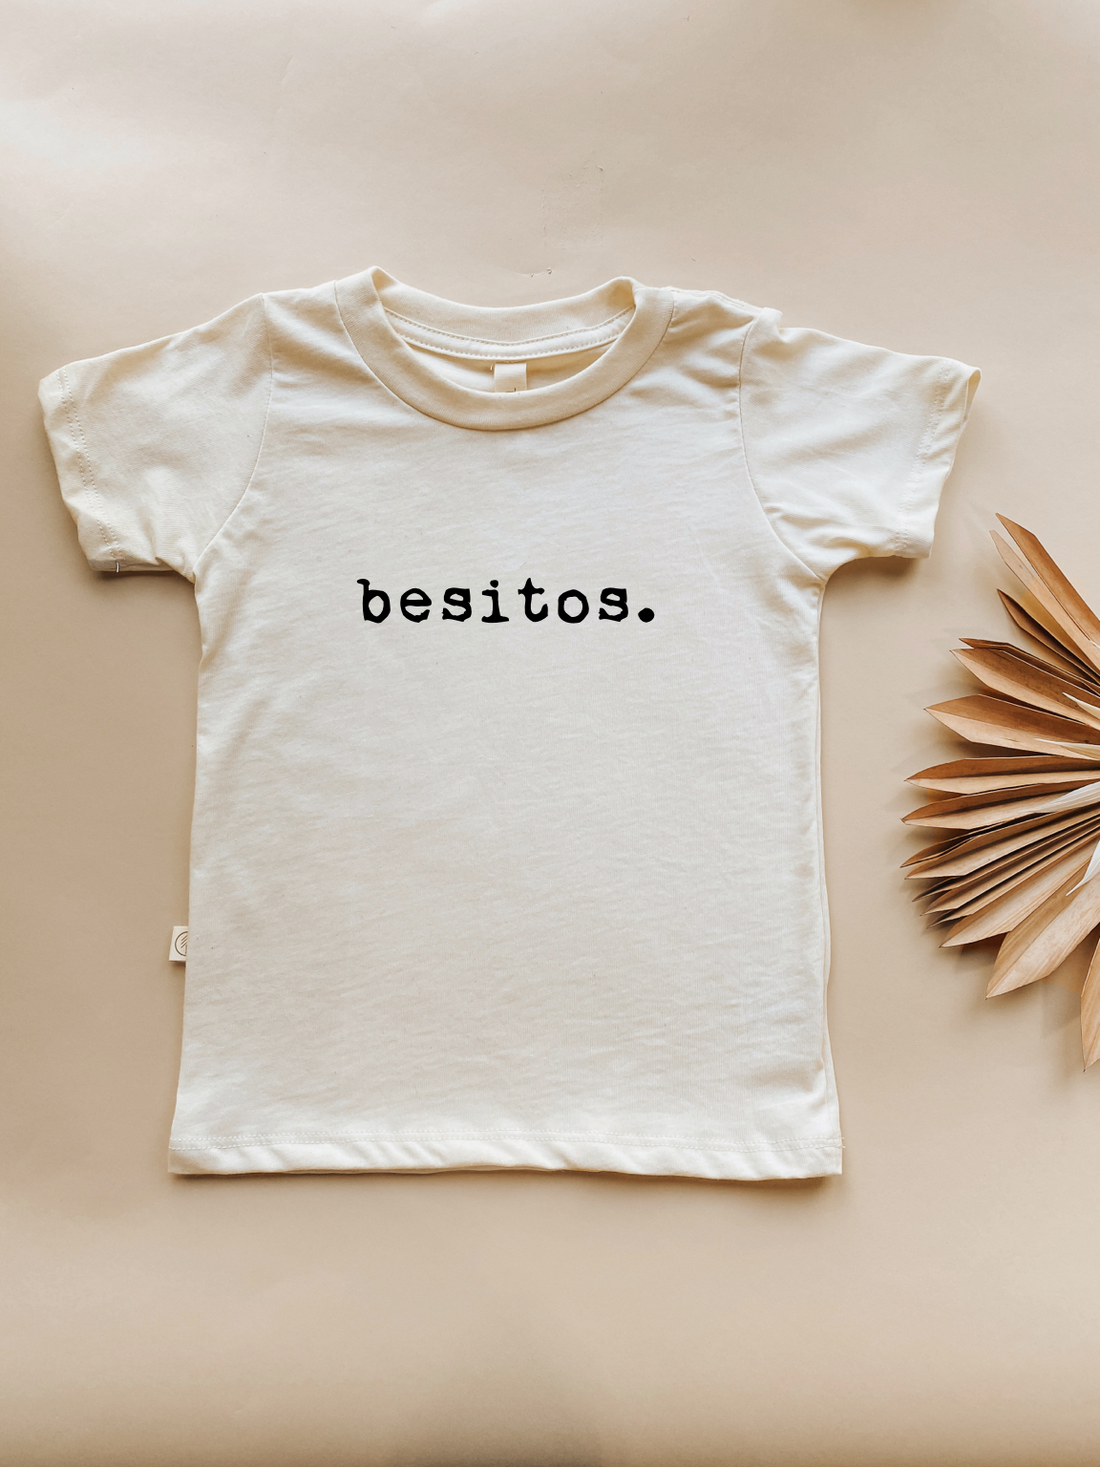 Besitos - Organic Cotton Kids Tee